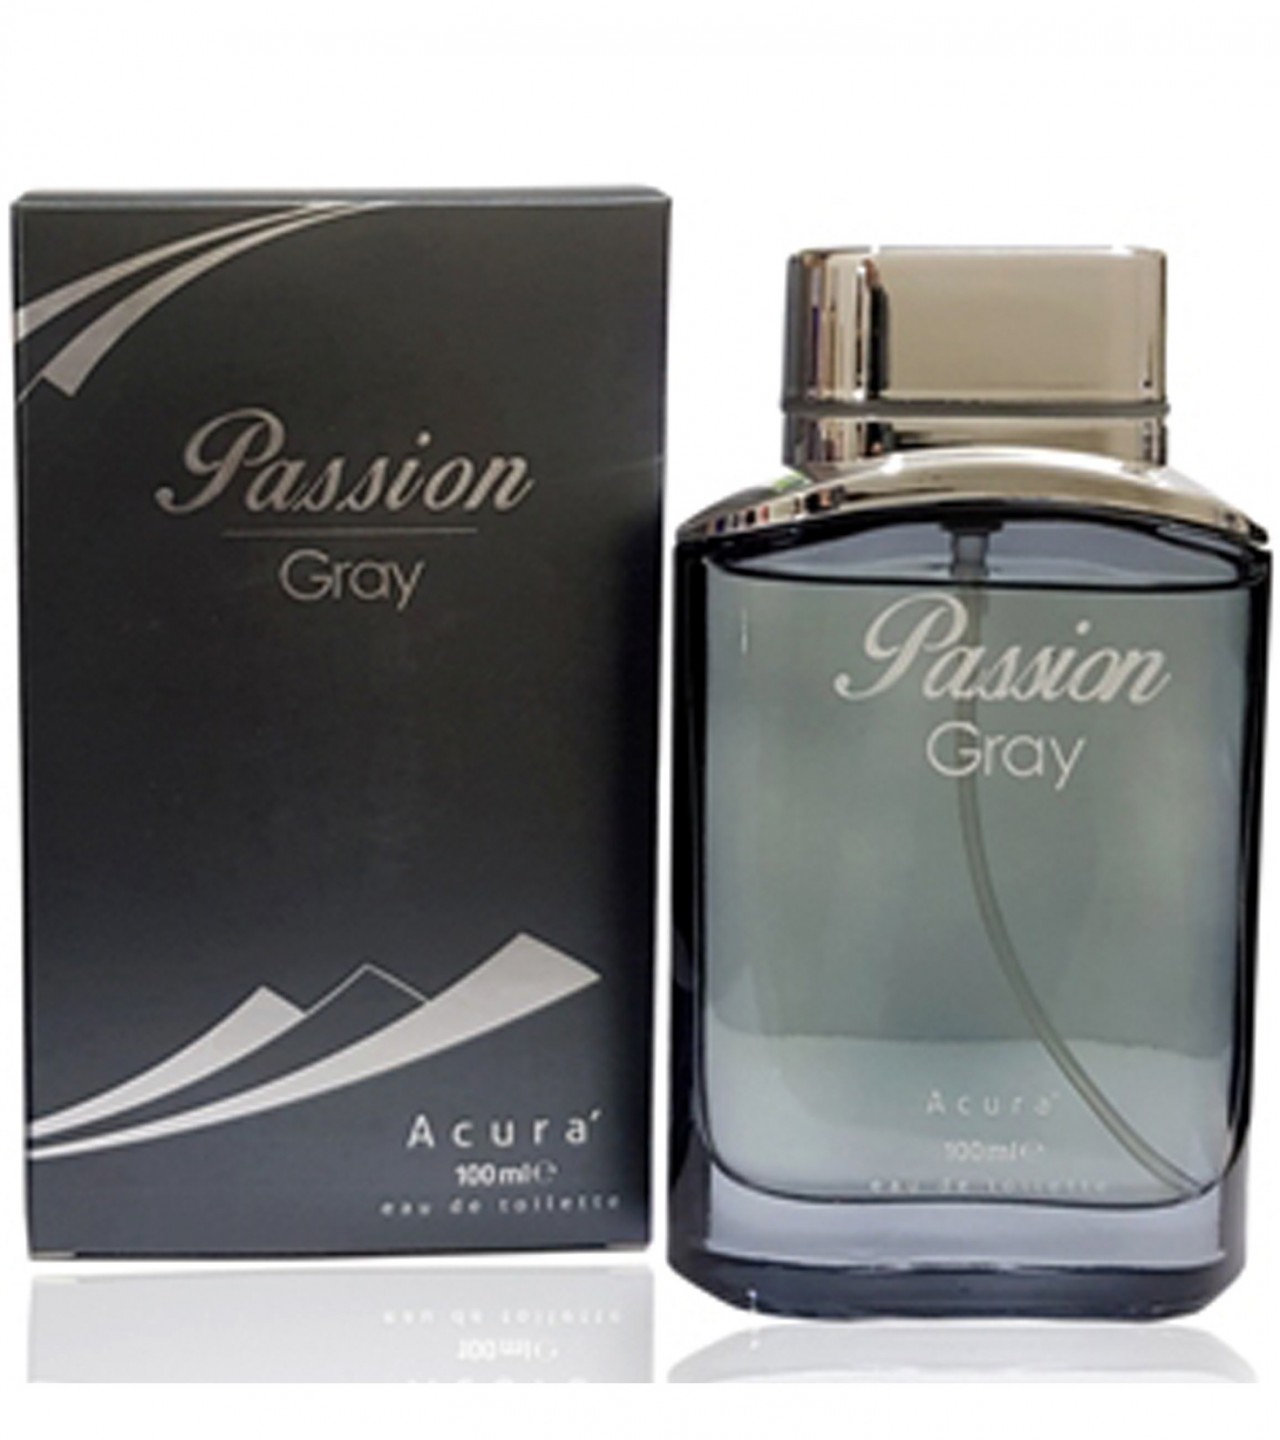 Acura Passion Grey Perfume For Men – 100 ml